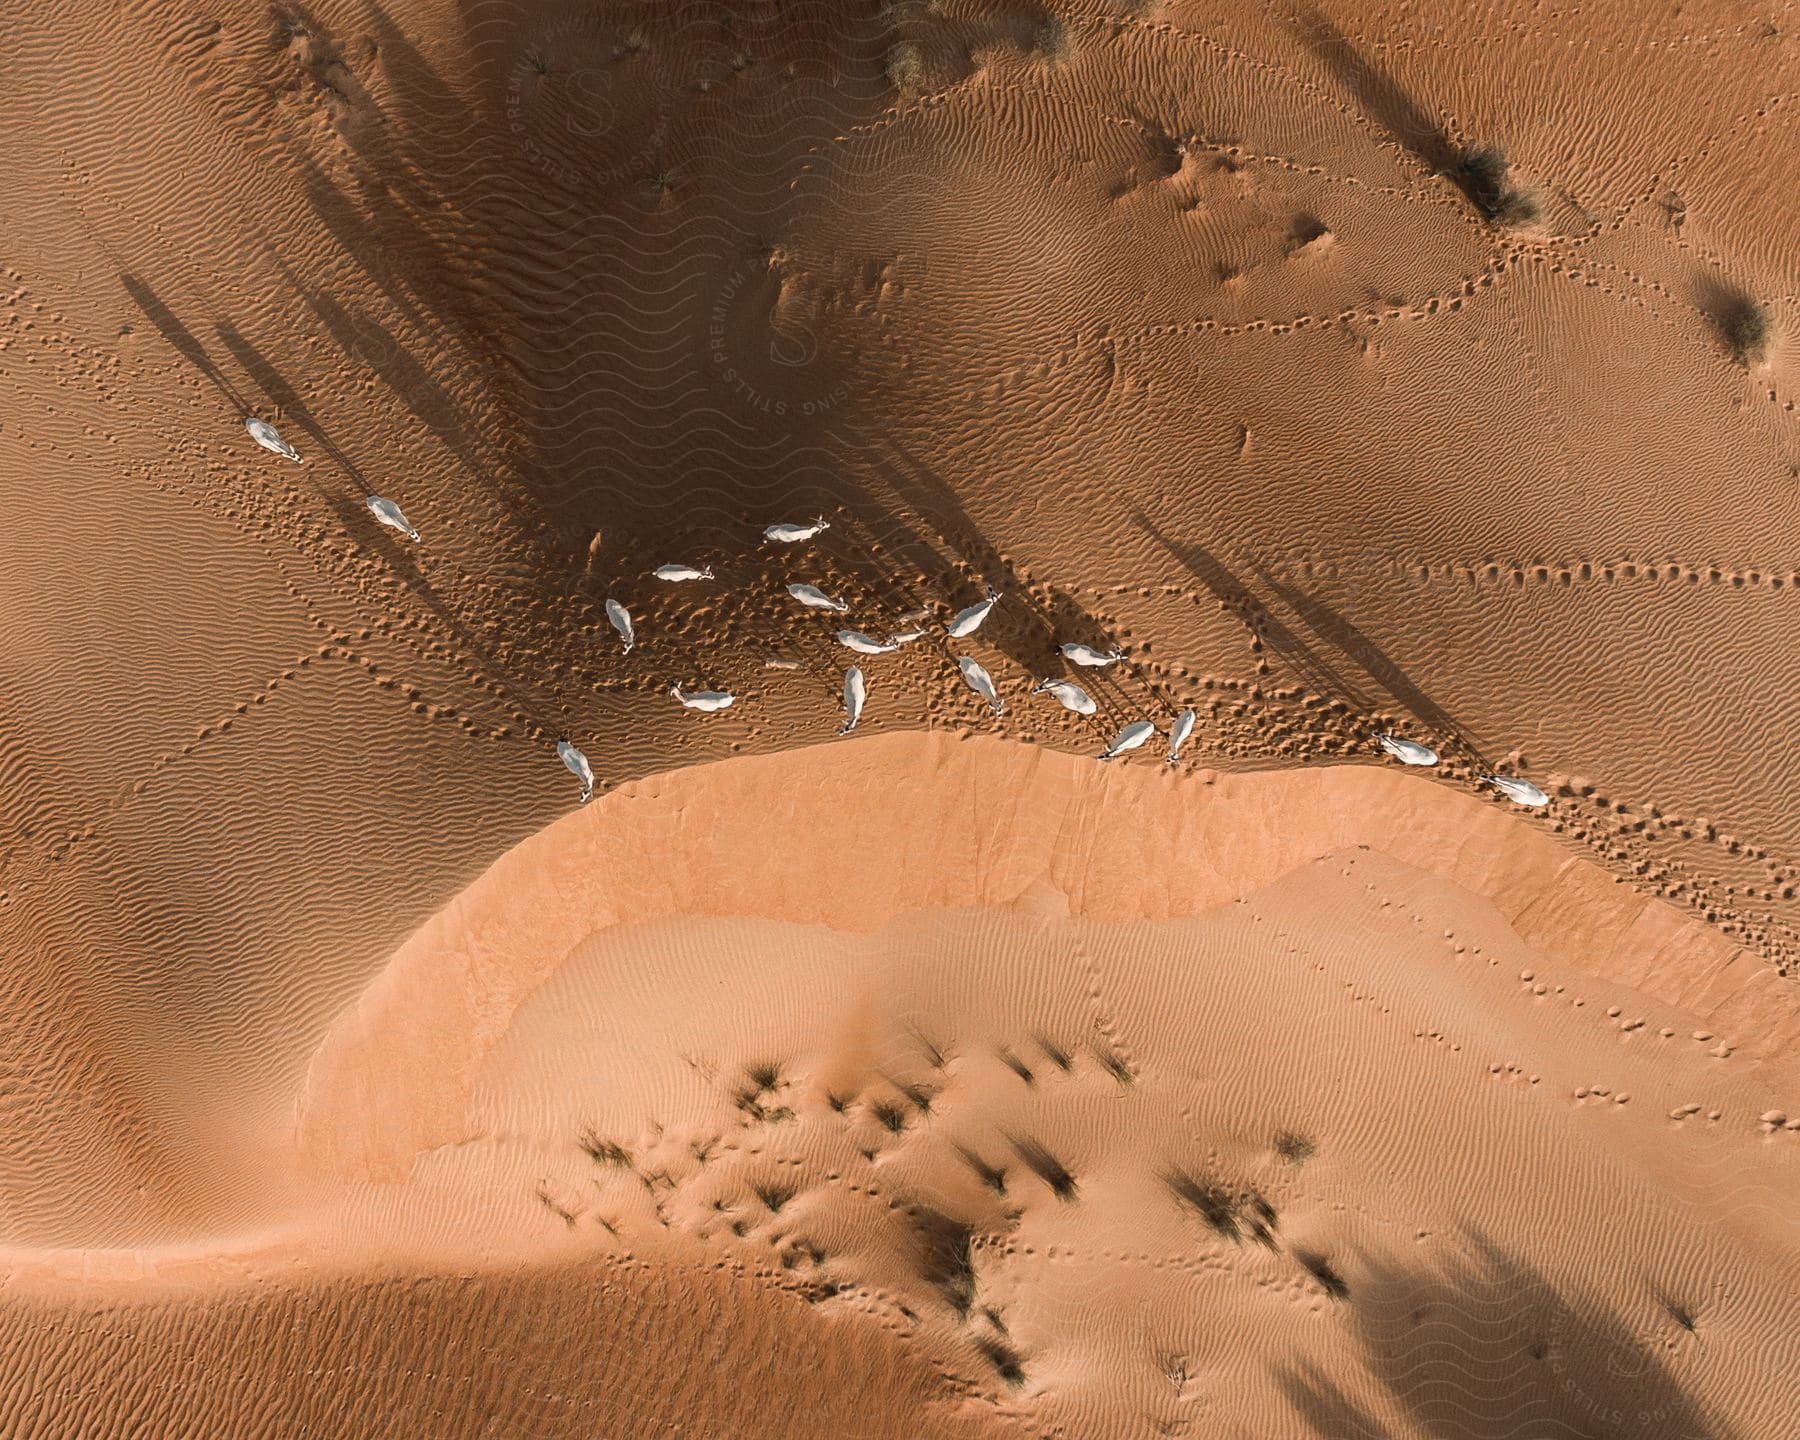 Aerial perspective of a desert landscape